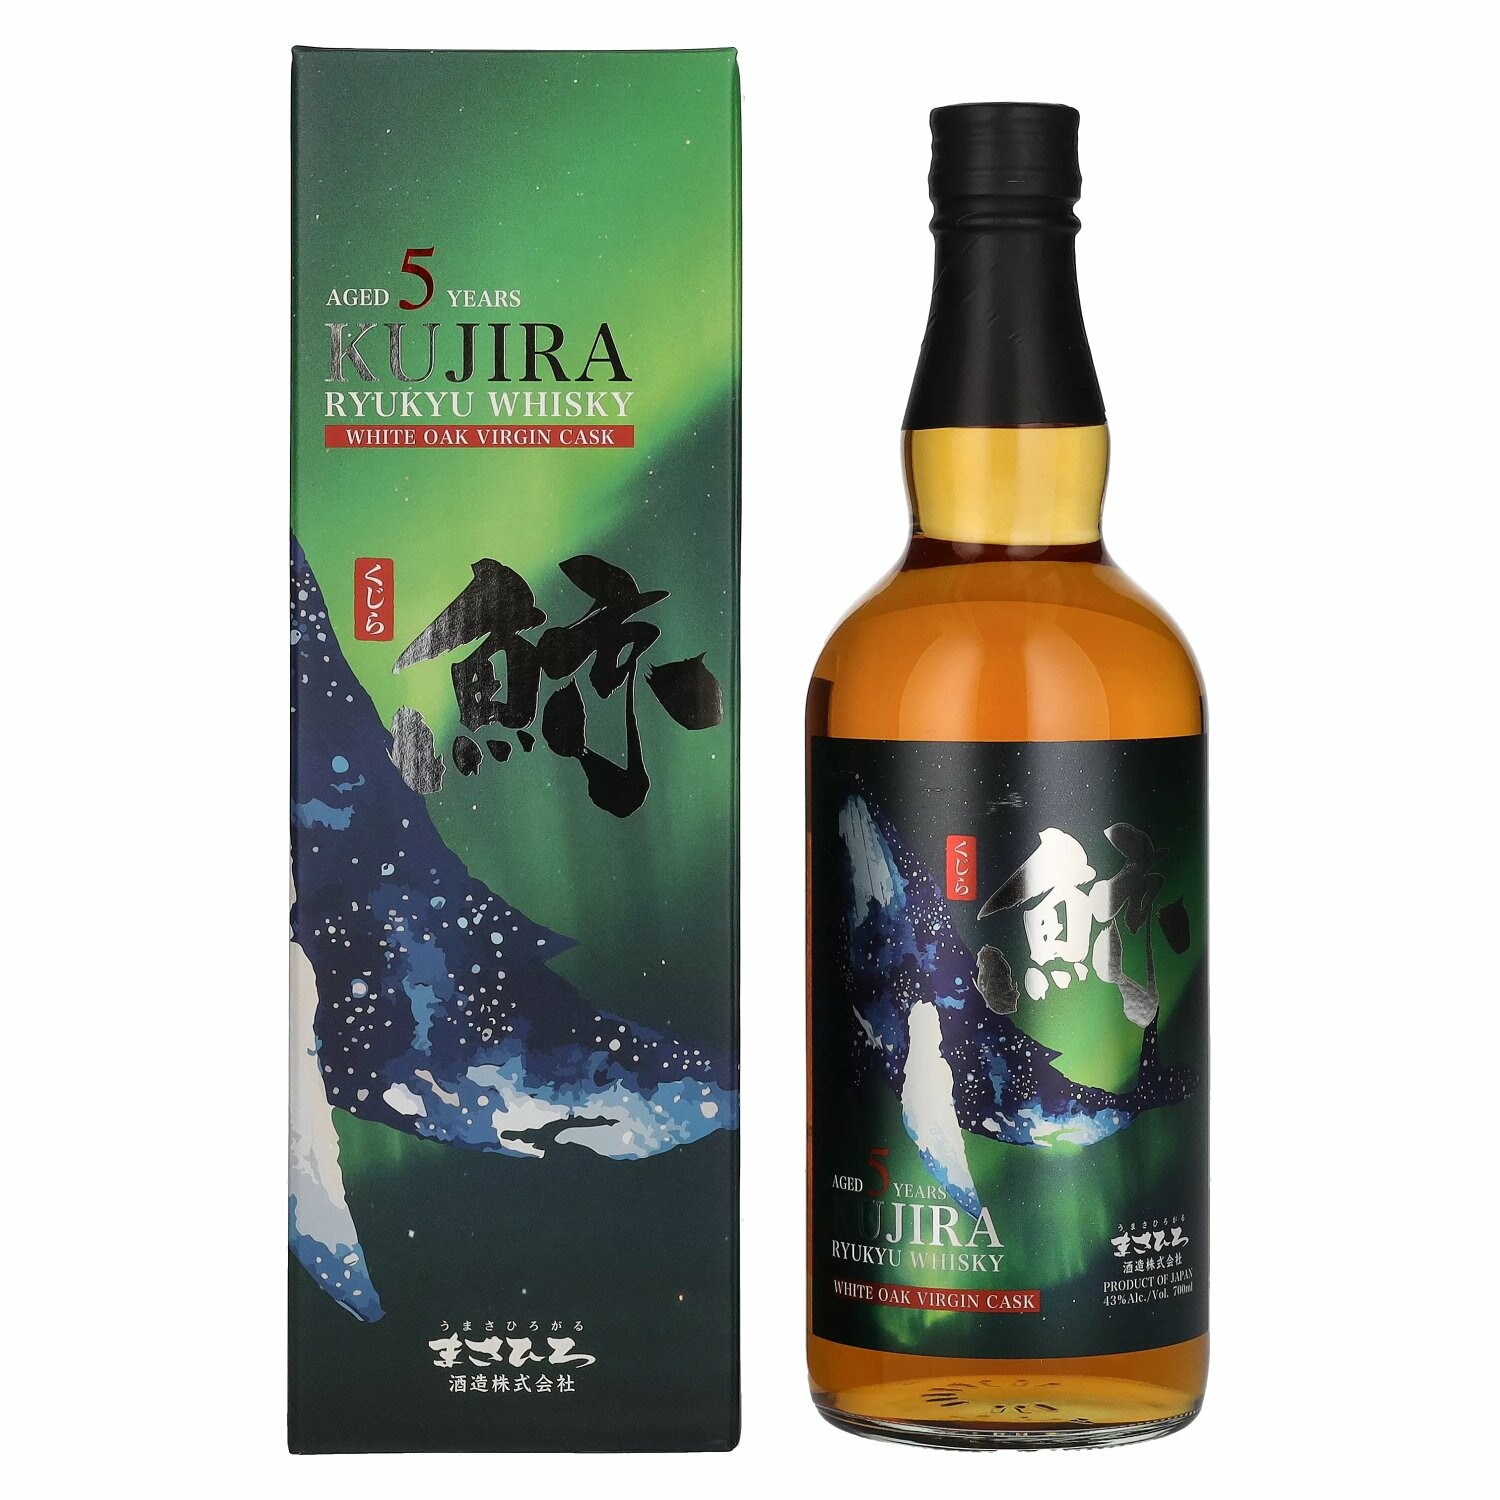 Kujira Ryukyu 5 Years Old WHITE OAK VIRGIN CASK Whisky 43% Vol. 0,7l in Giftbox